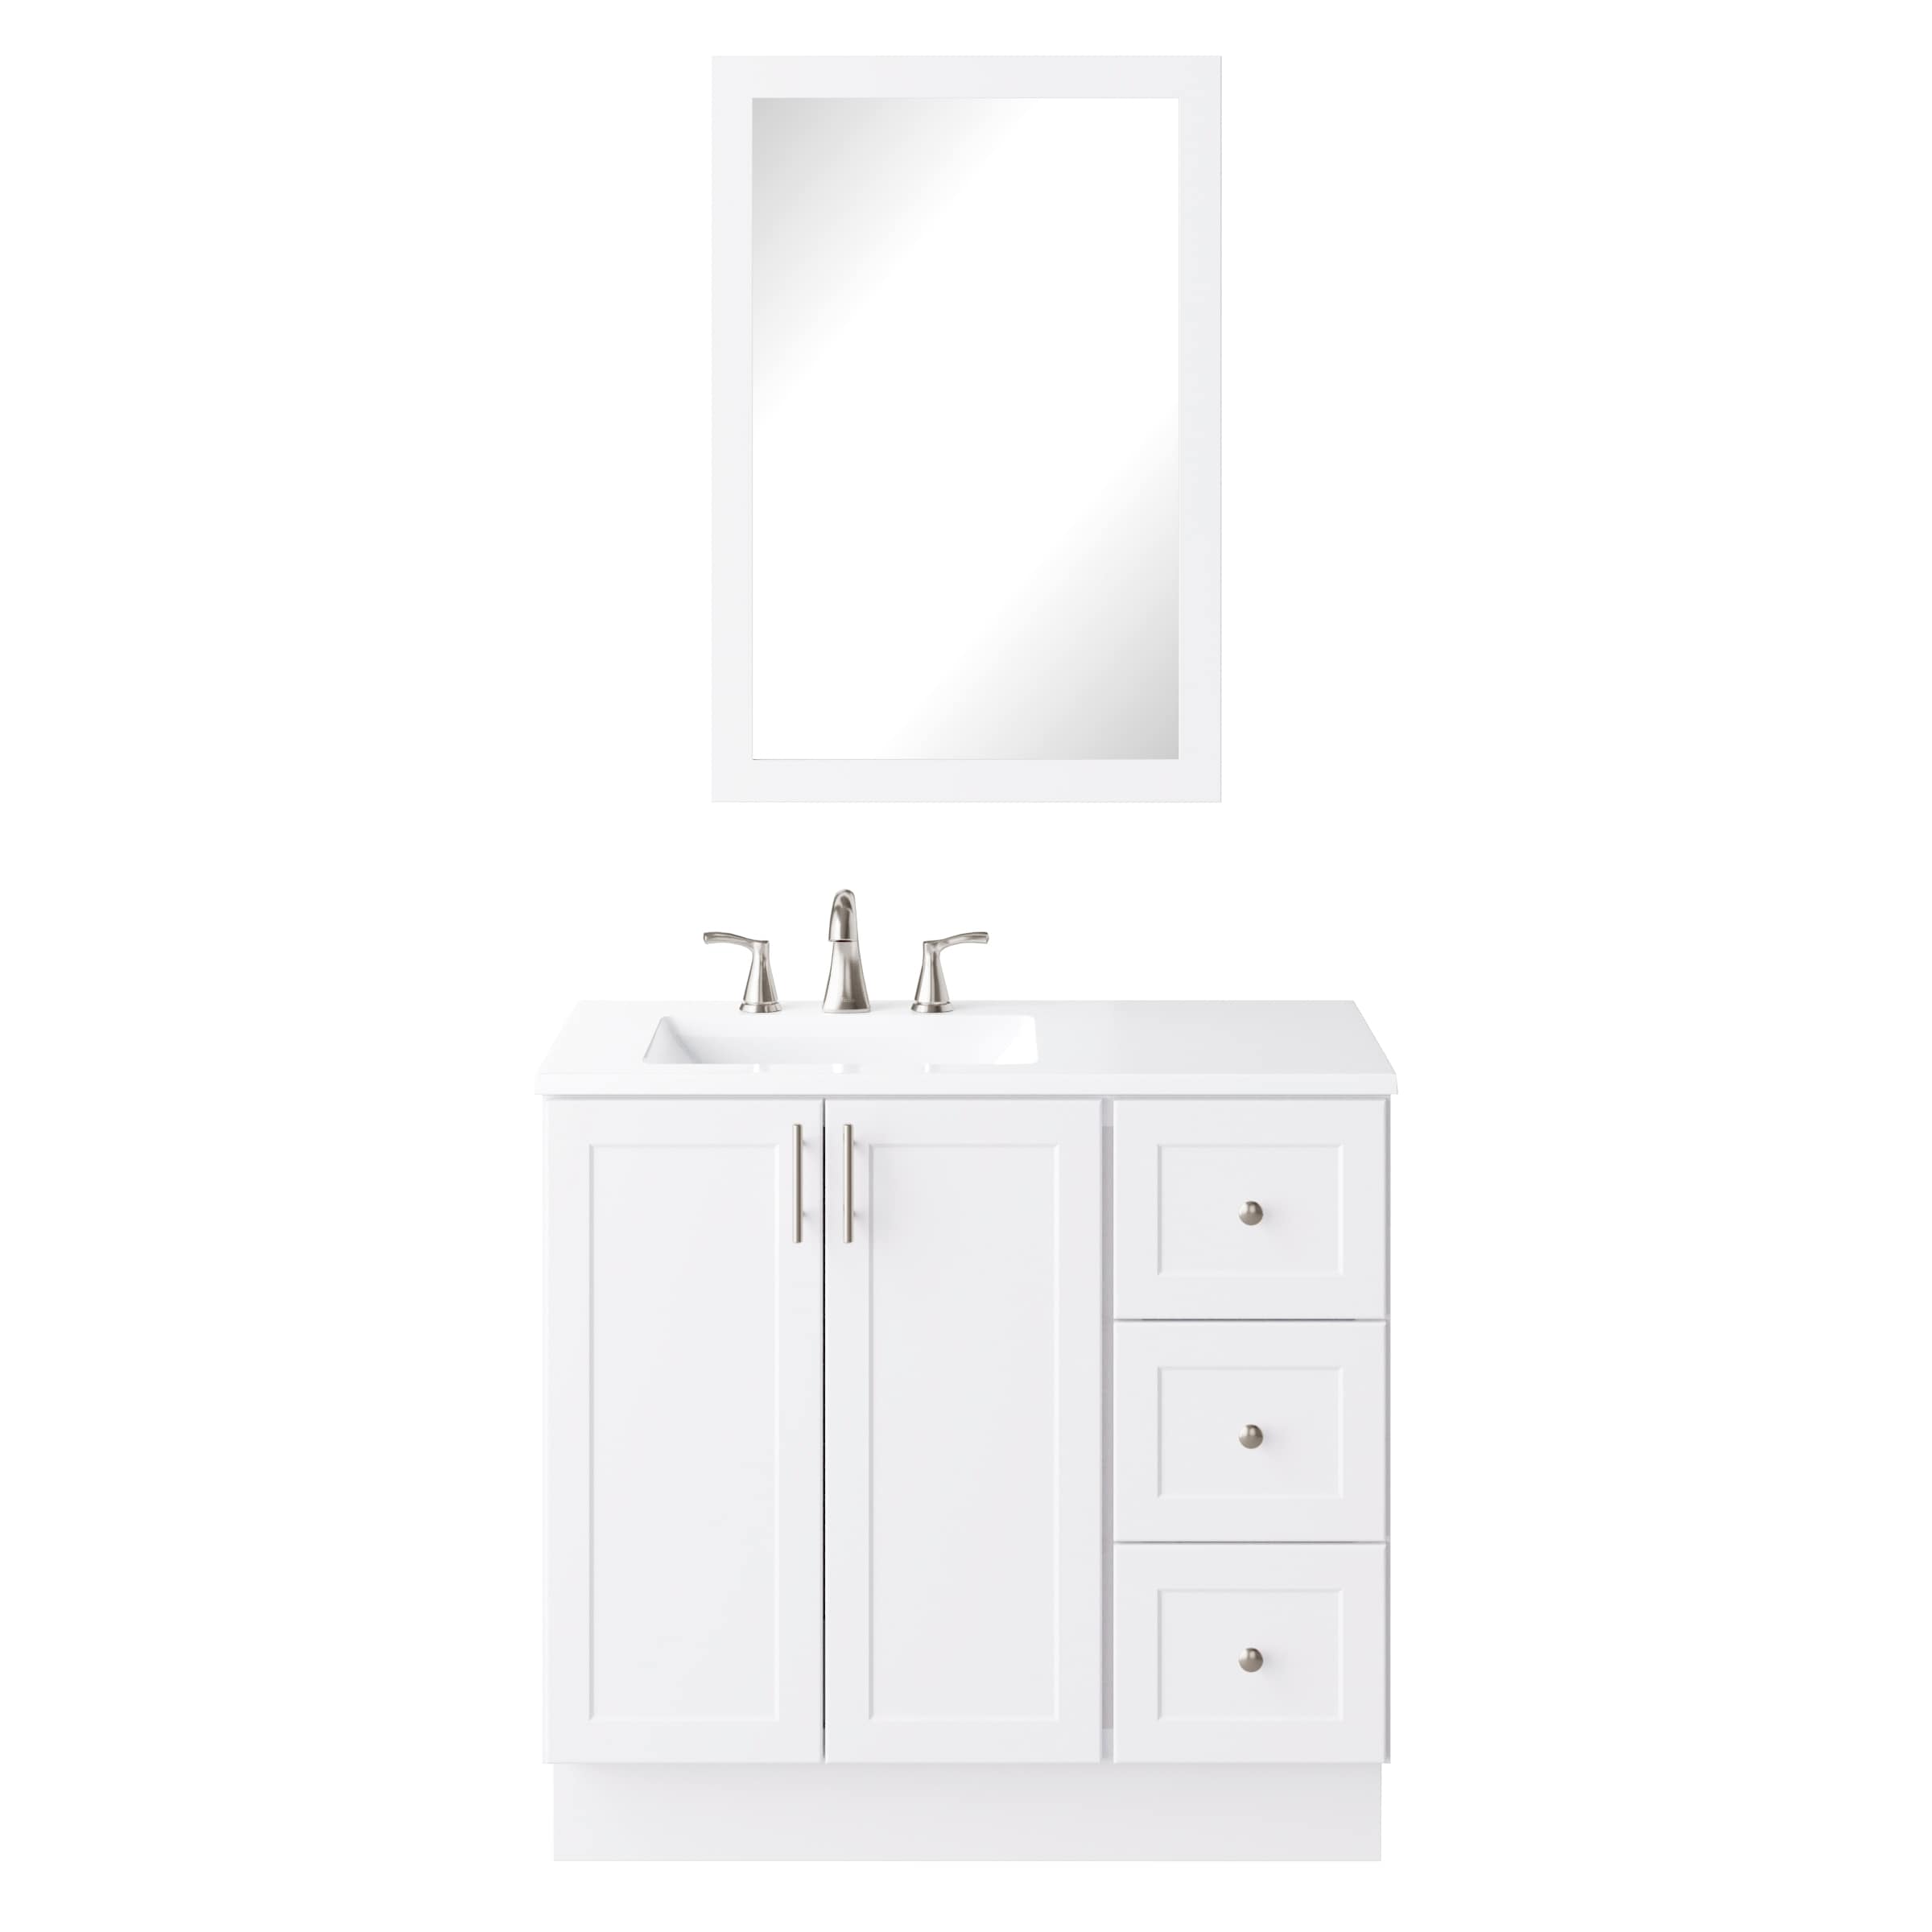 Single Sink Bathroom Vanity With, High Quality Bathroom Vanity Mirrors